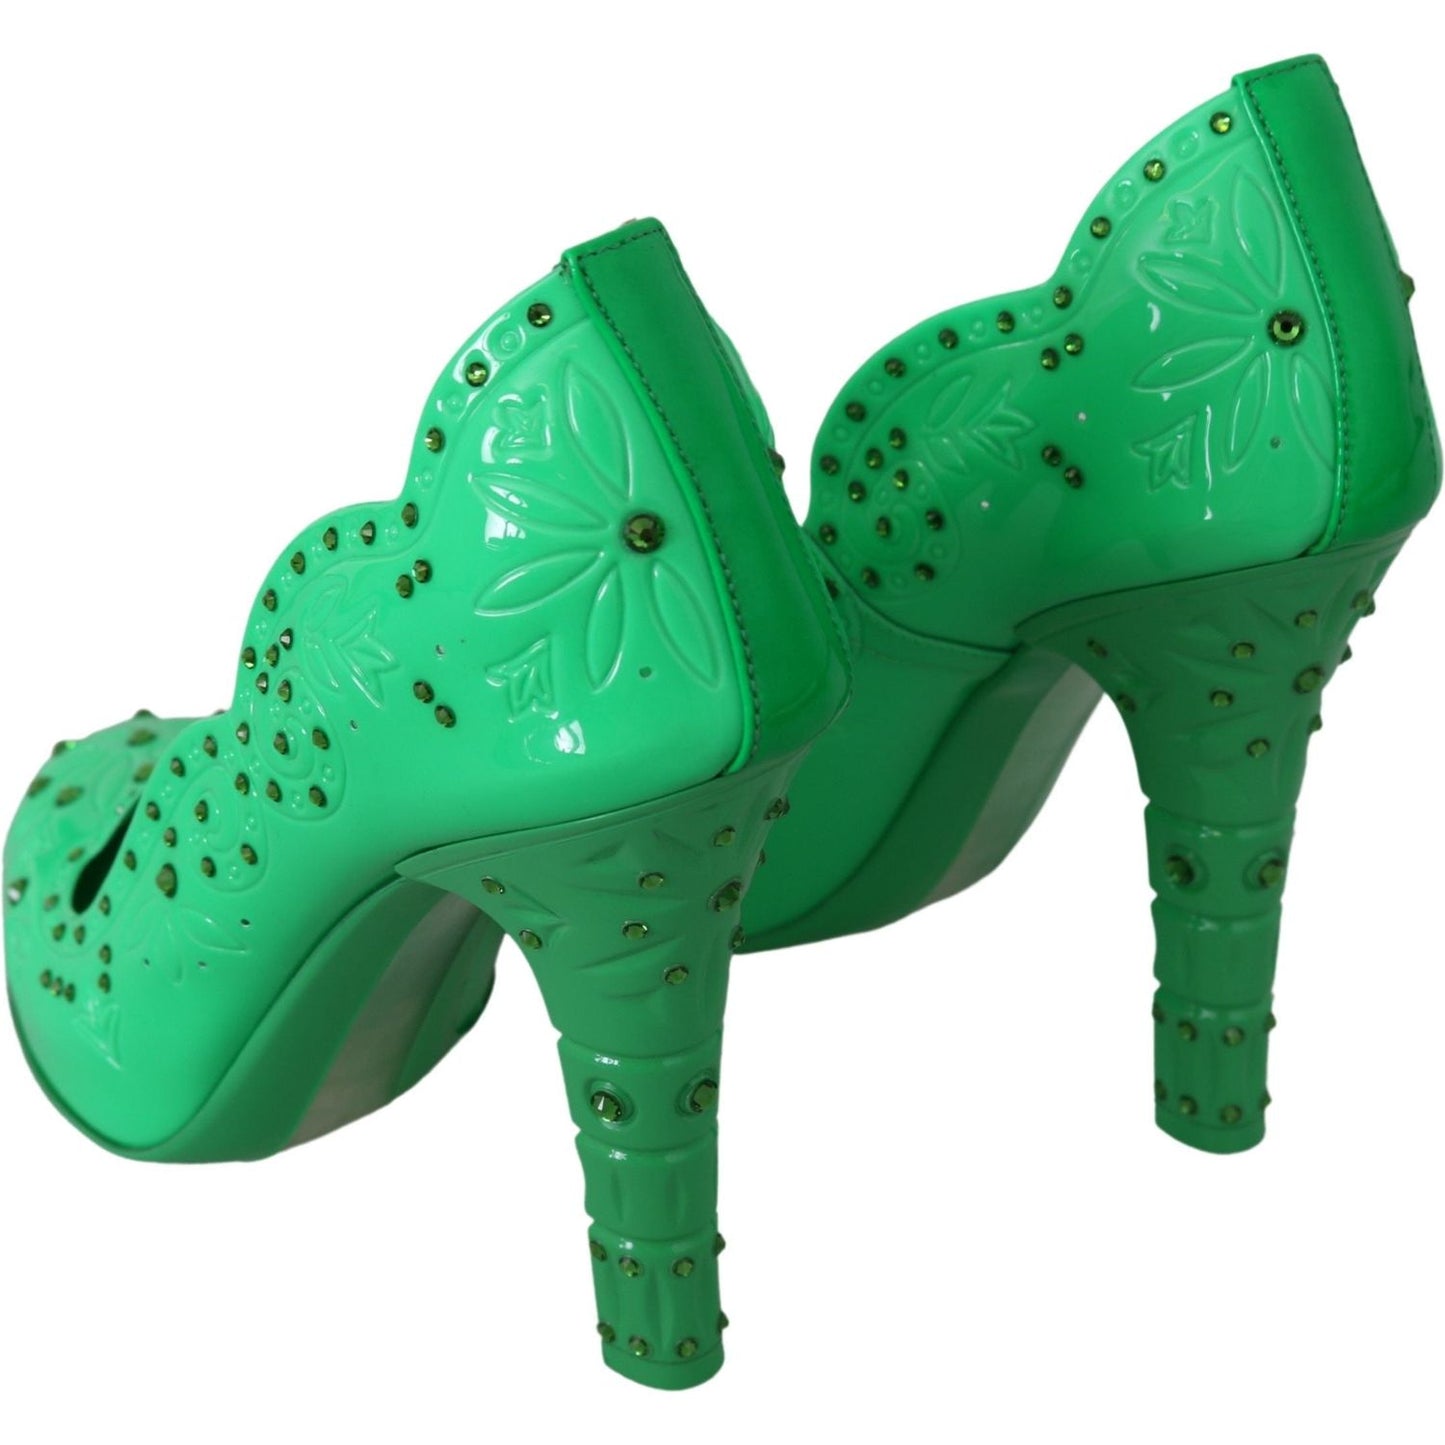 Dolce & Gabbana Enchanting Crystal Cinderella Pumps in Lush Green green-crystal-floral-cinderella-heels-shoes IMG_8140-1066743a-acb.jpg